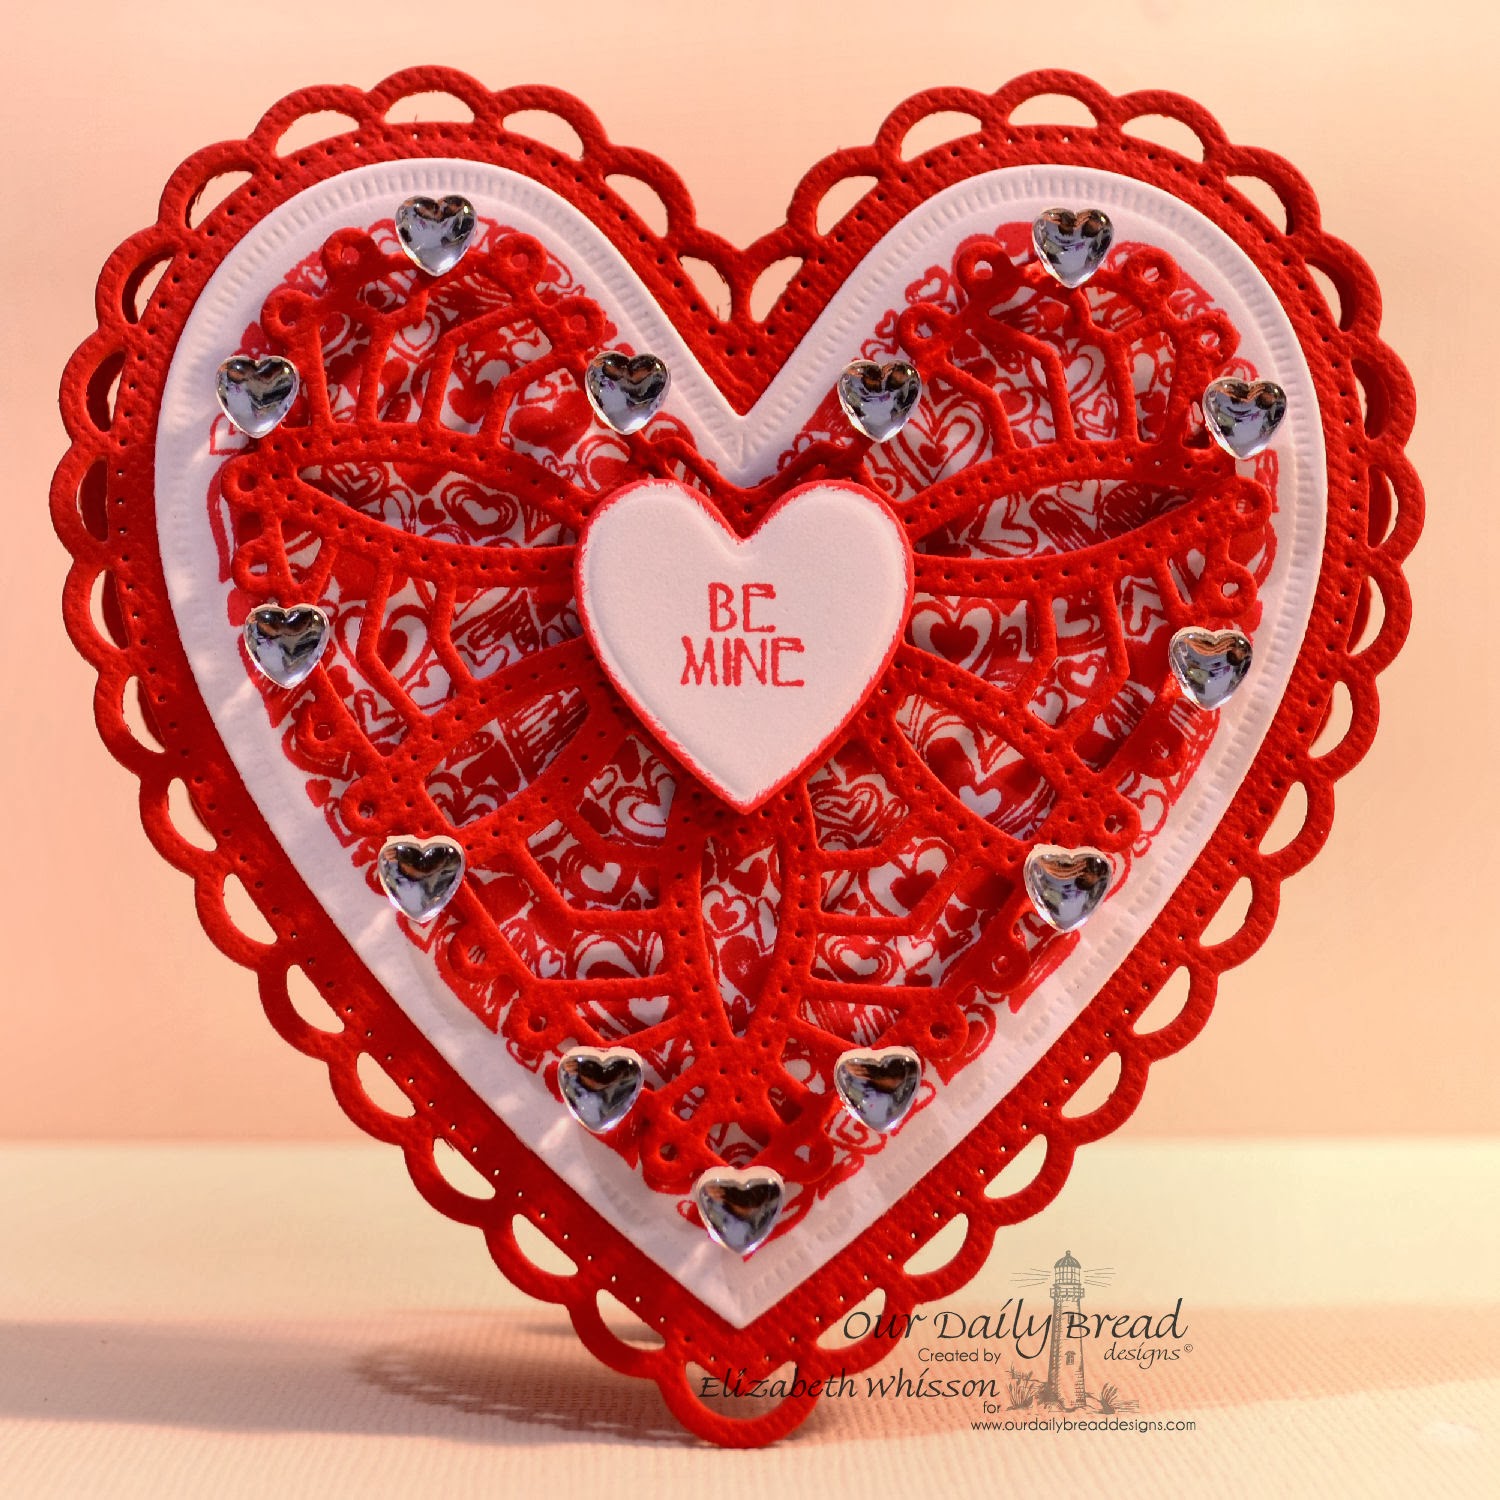 Elizabeth Whisson, Our Daily Bread Designs, ODBDSLC192, ODBD, ODBDDT, heart, love, Valentine's Day, Clean Heart, Ornate Hearts, Heart of Joy, love, handmade card, shaped card